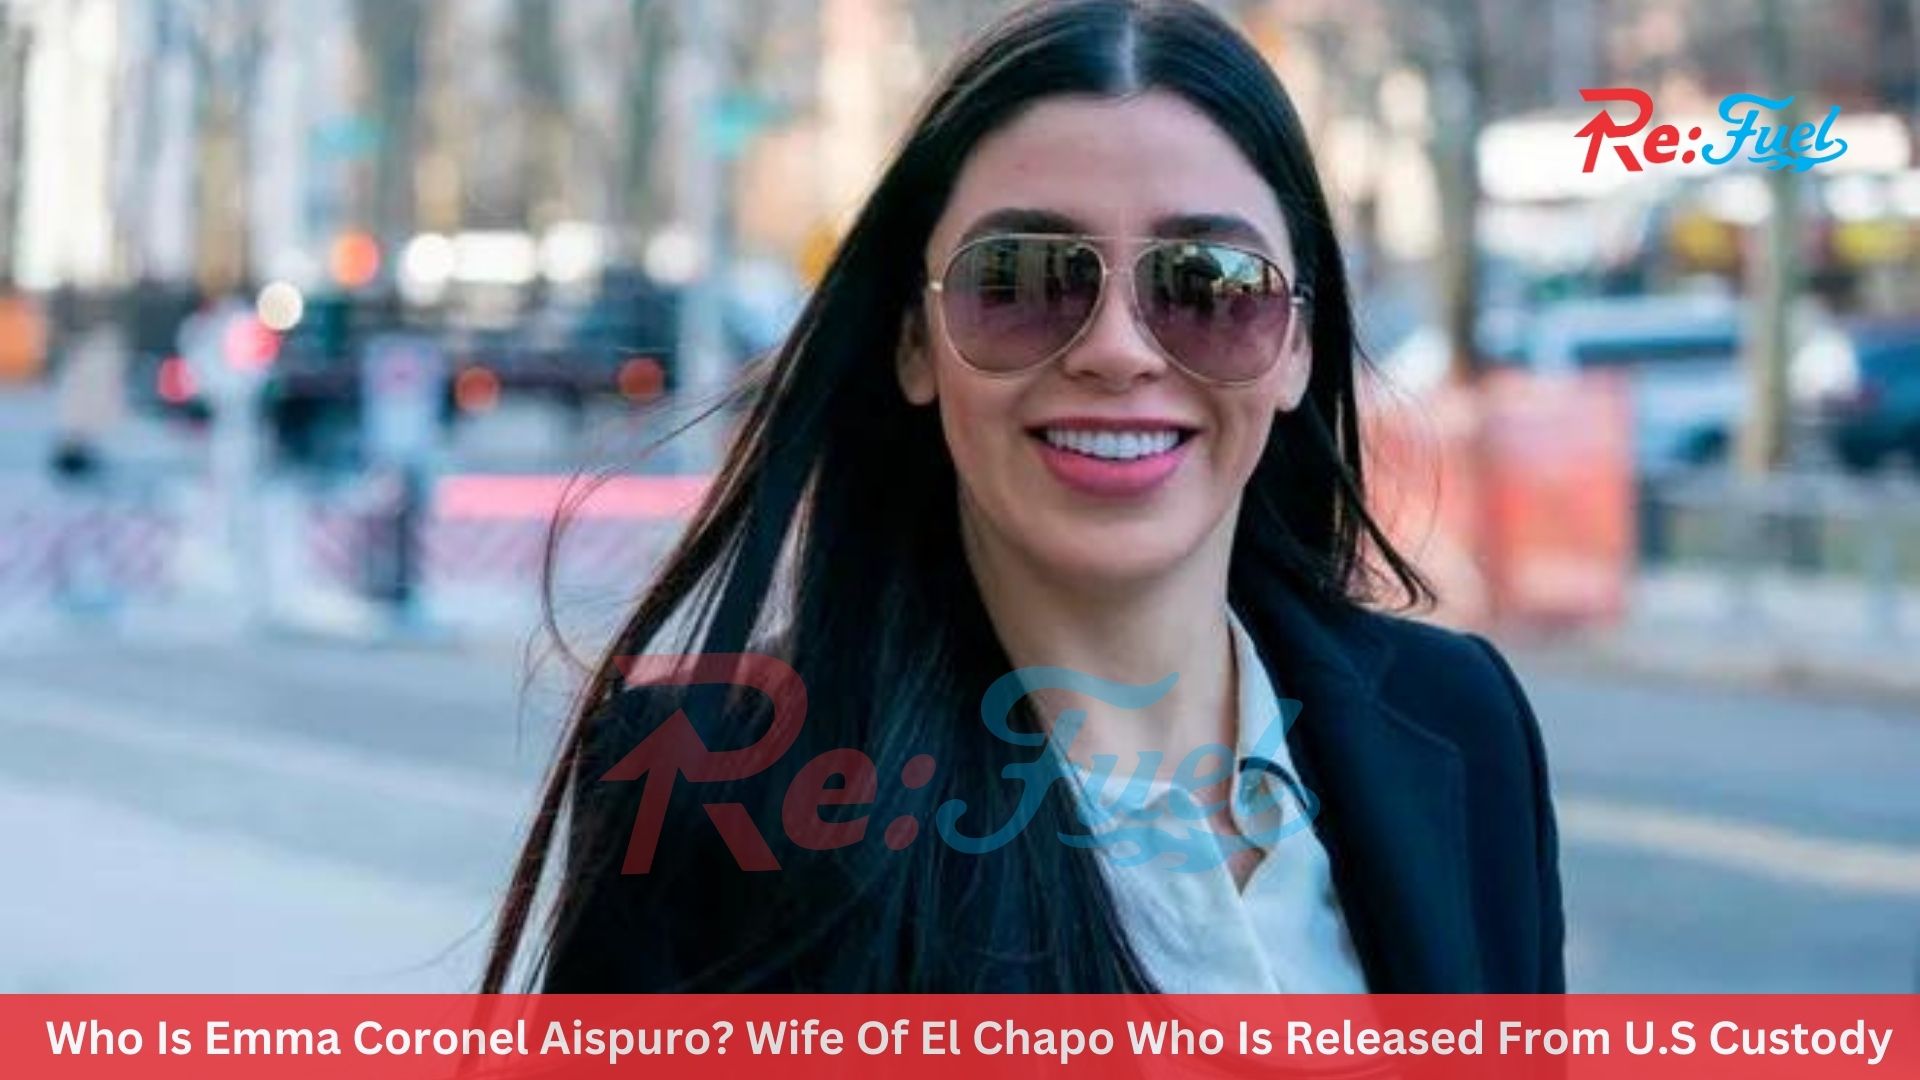 Who Is Emma Coronel Aispuro? Wife Of El Chapo Who Is Released From U.S Custody